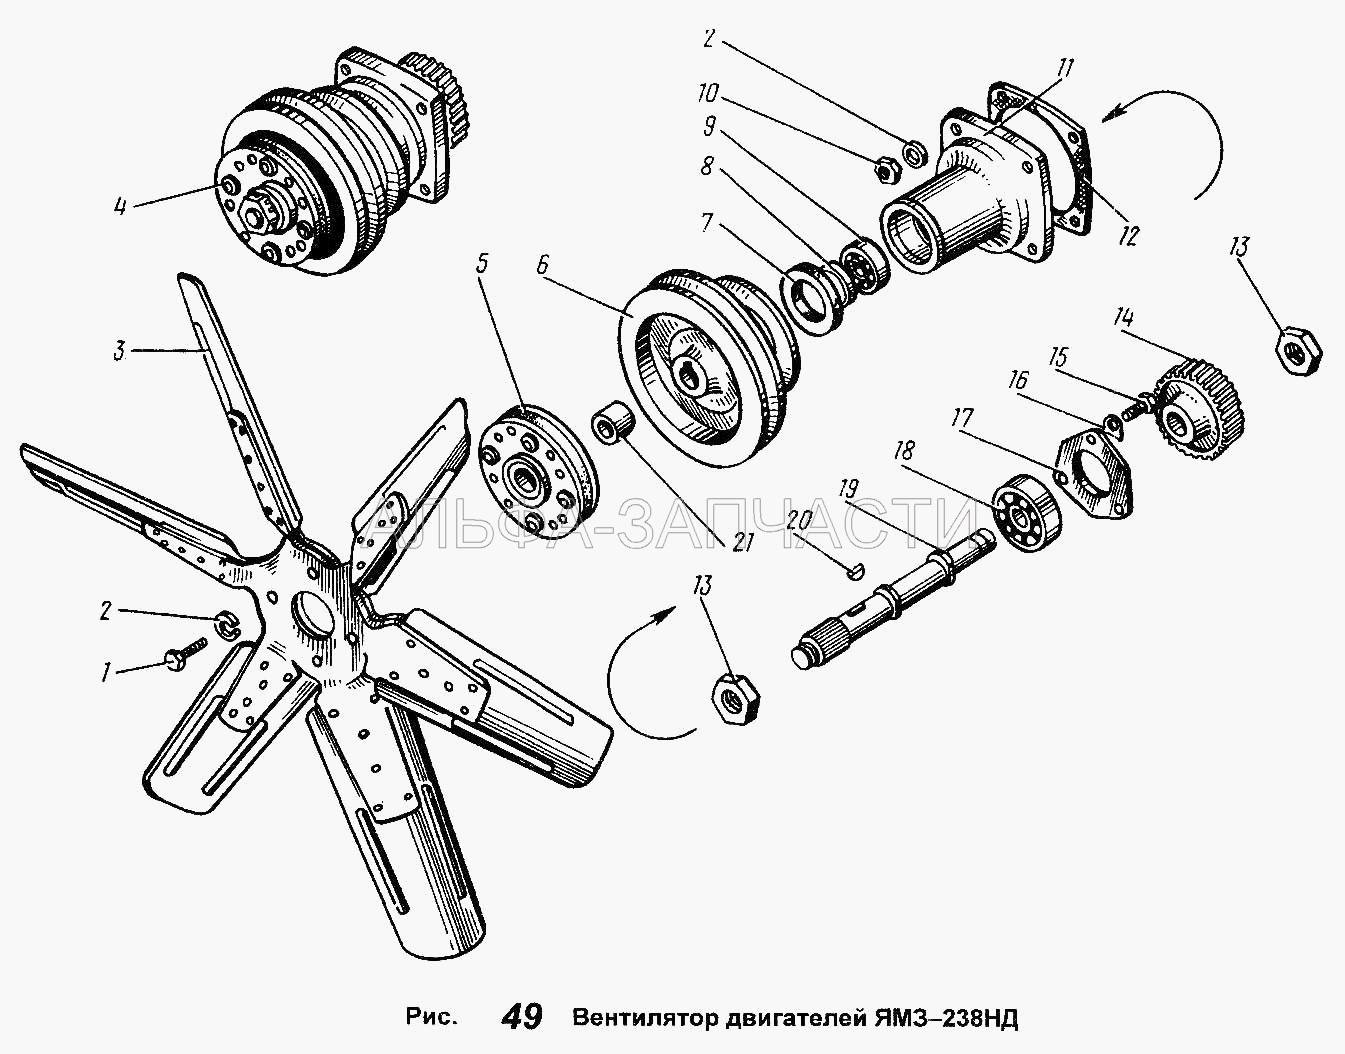 Вентилятор двигателя ЯМЗ-238НД  